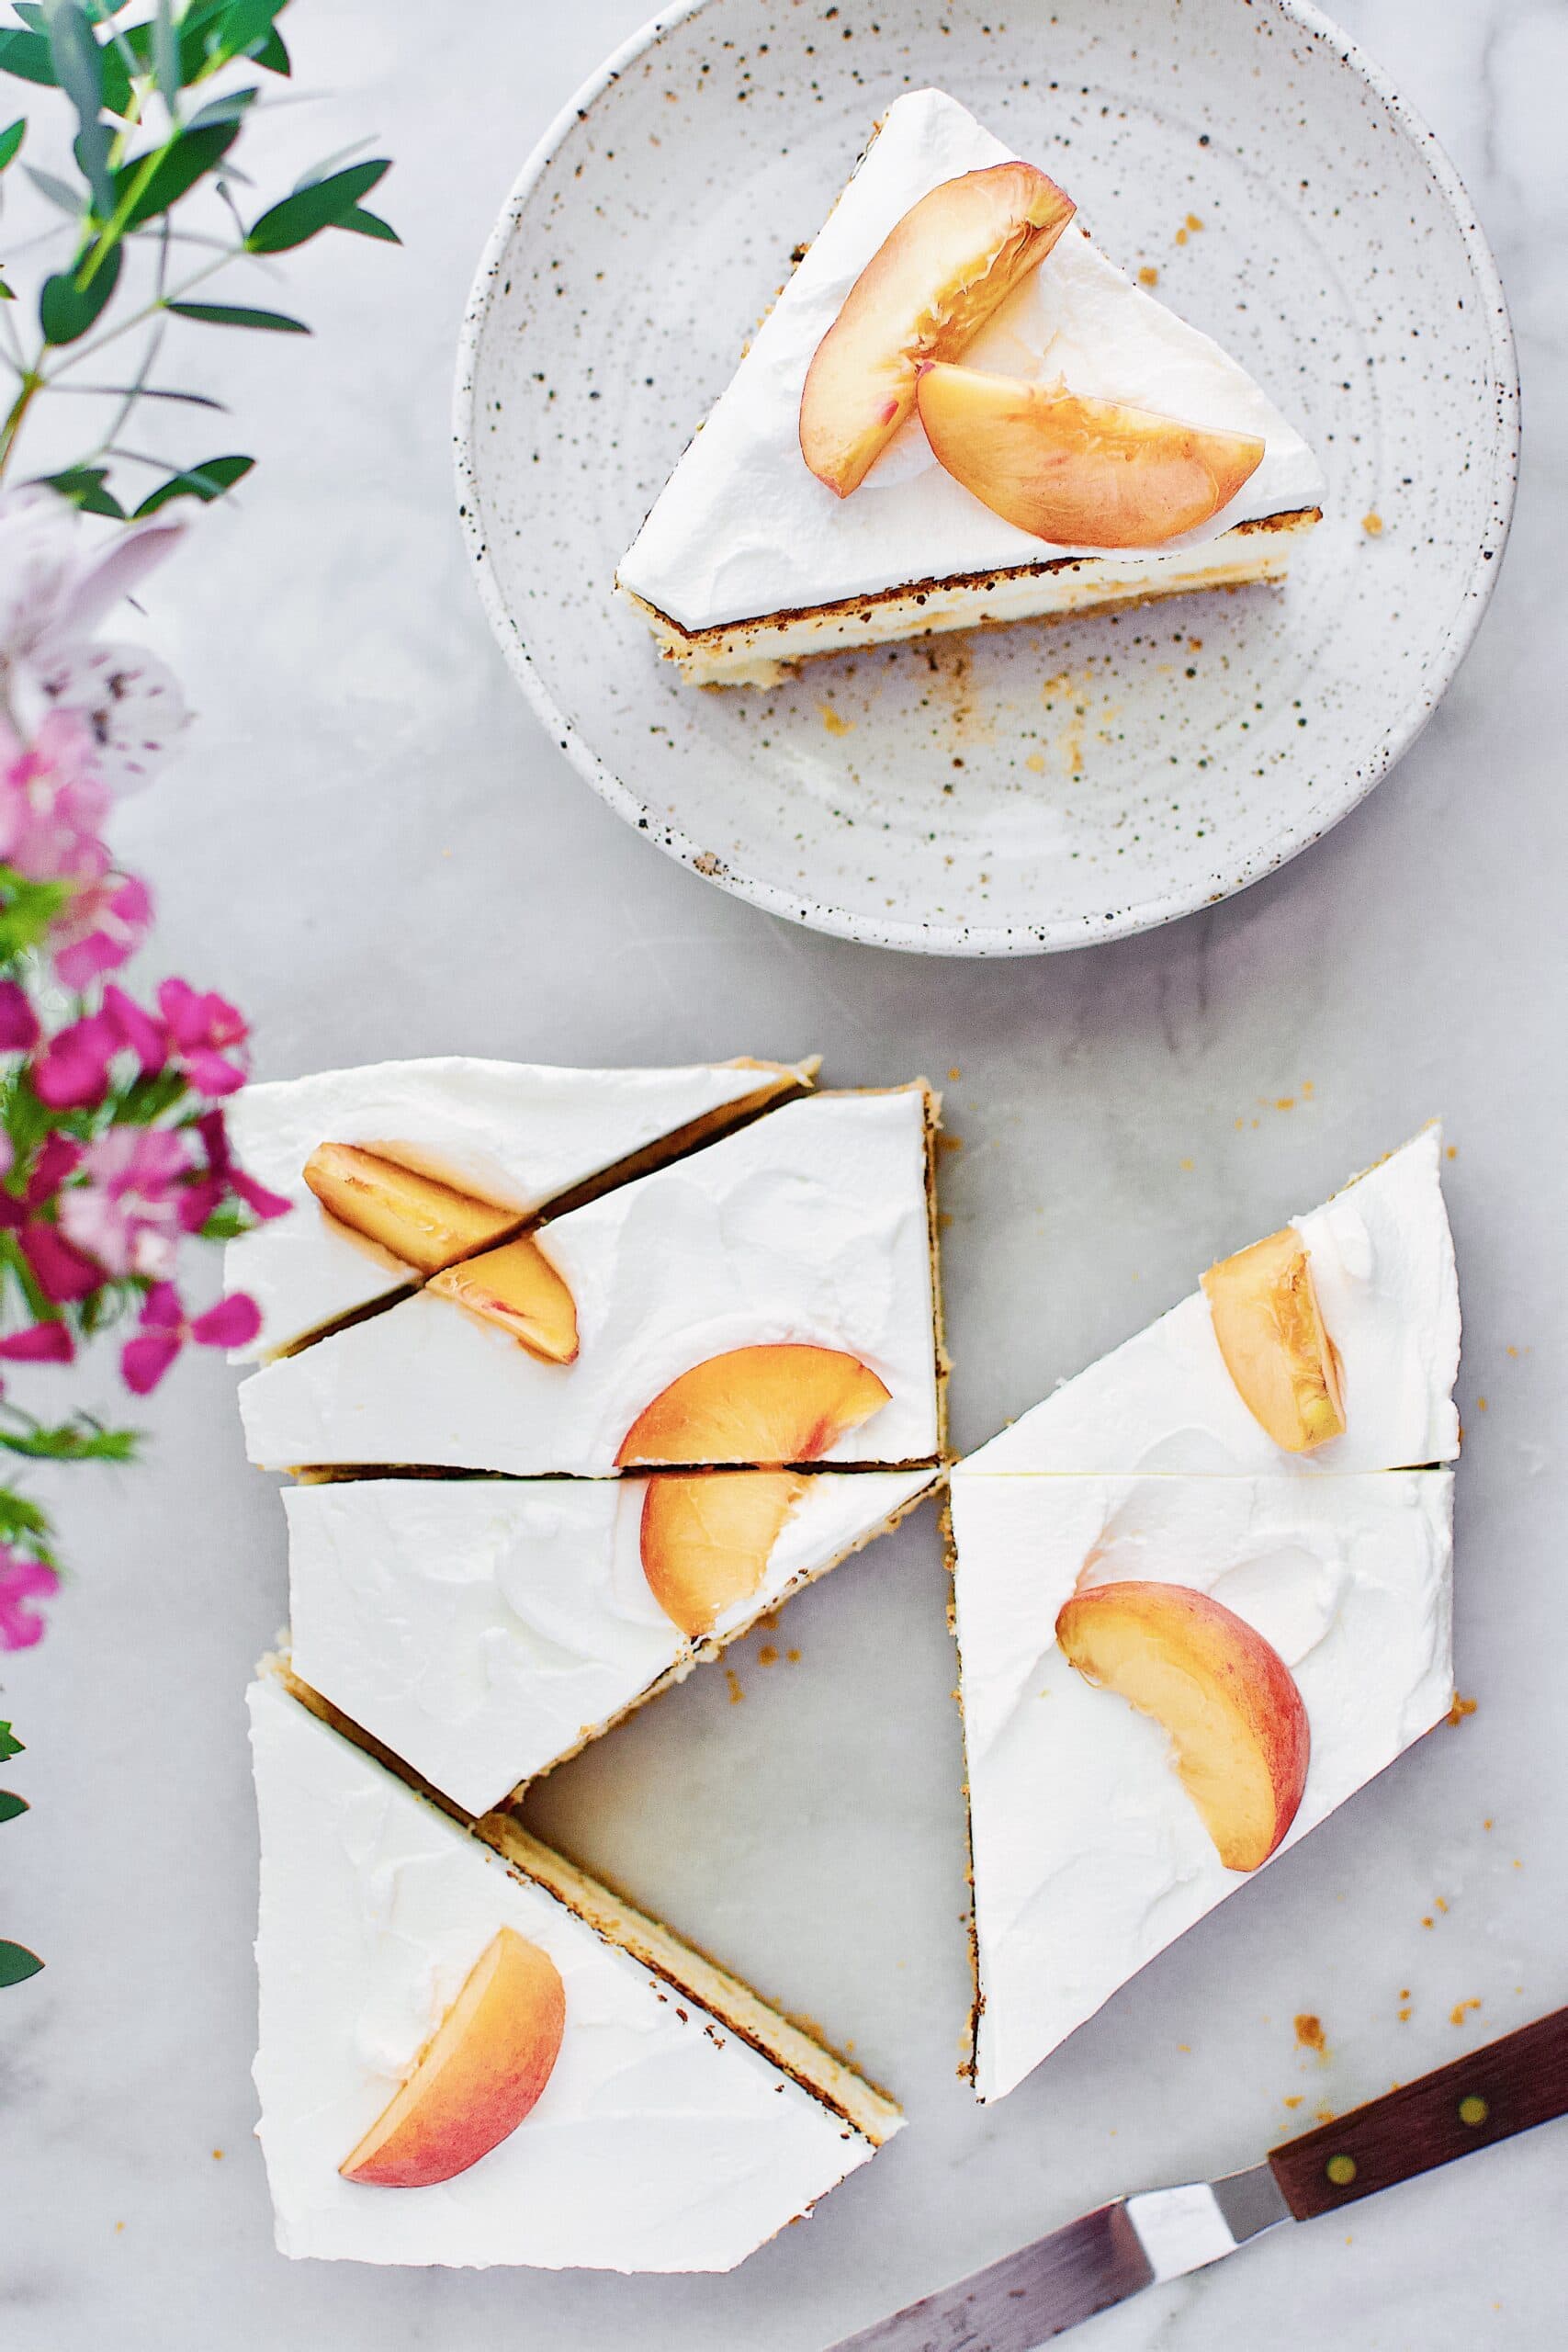 Peaches and Cream Cheesecake